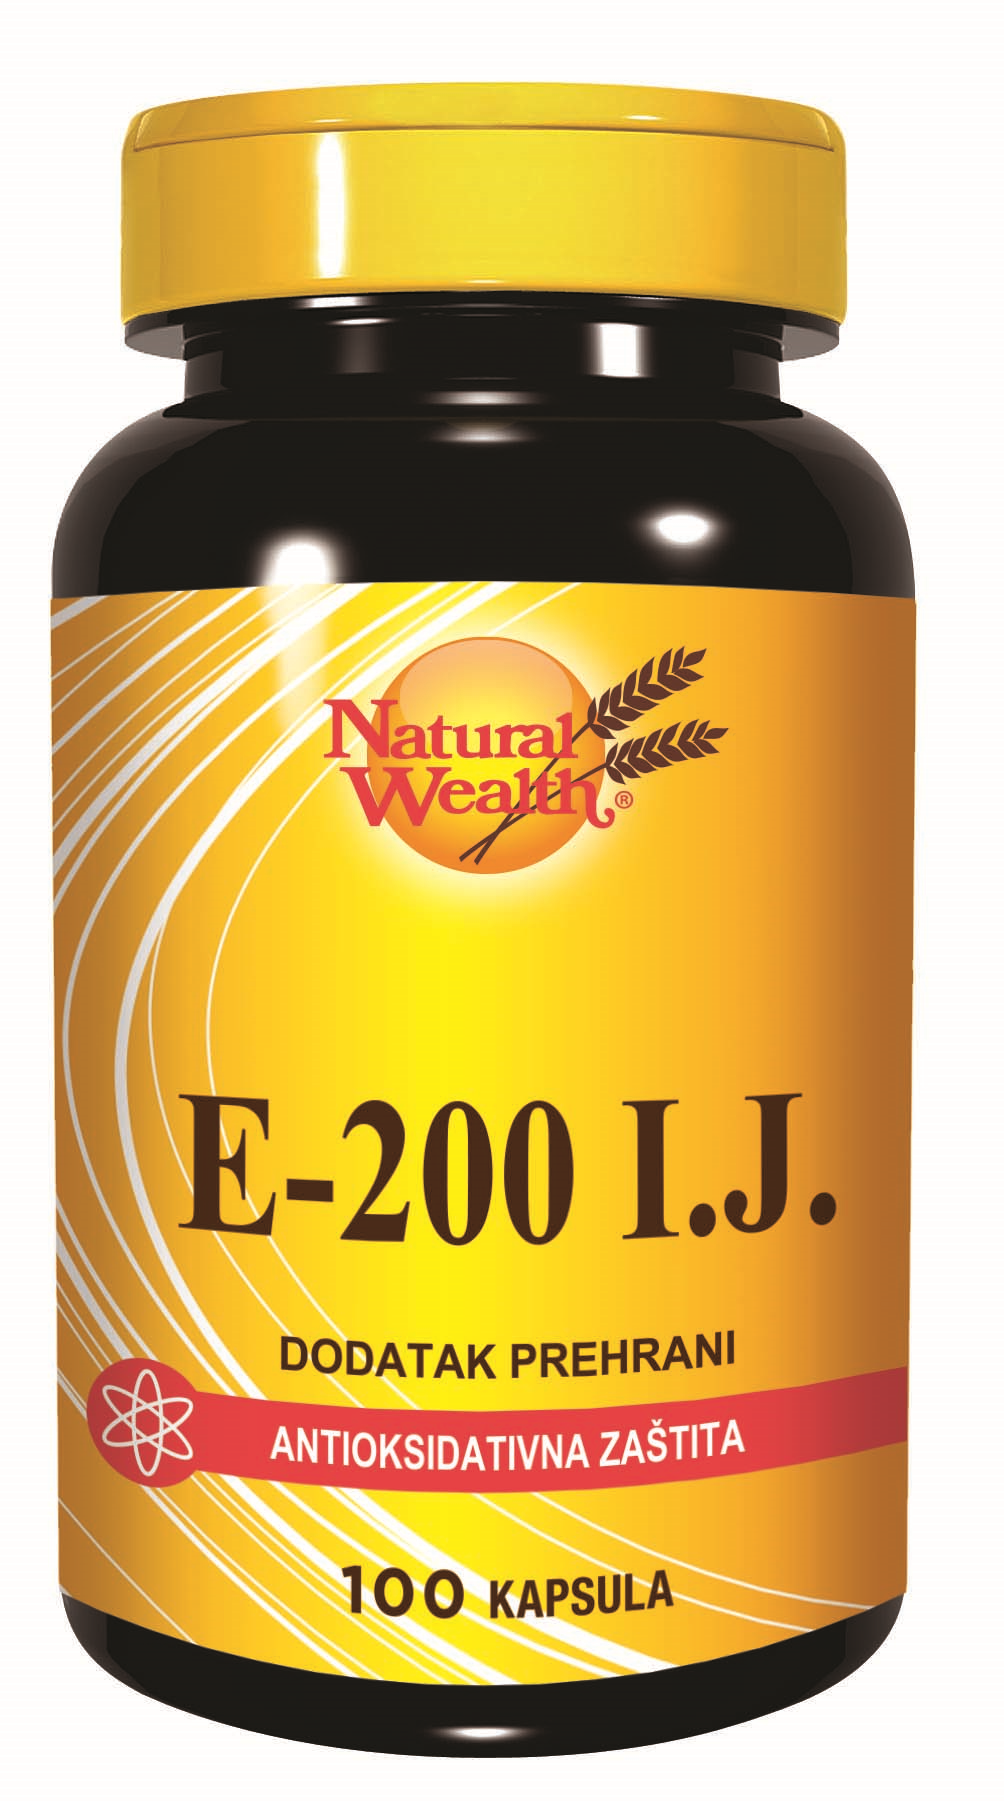 Natural Wealth Vitamin E 134 mg 200 IE, 100 kapsul